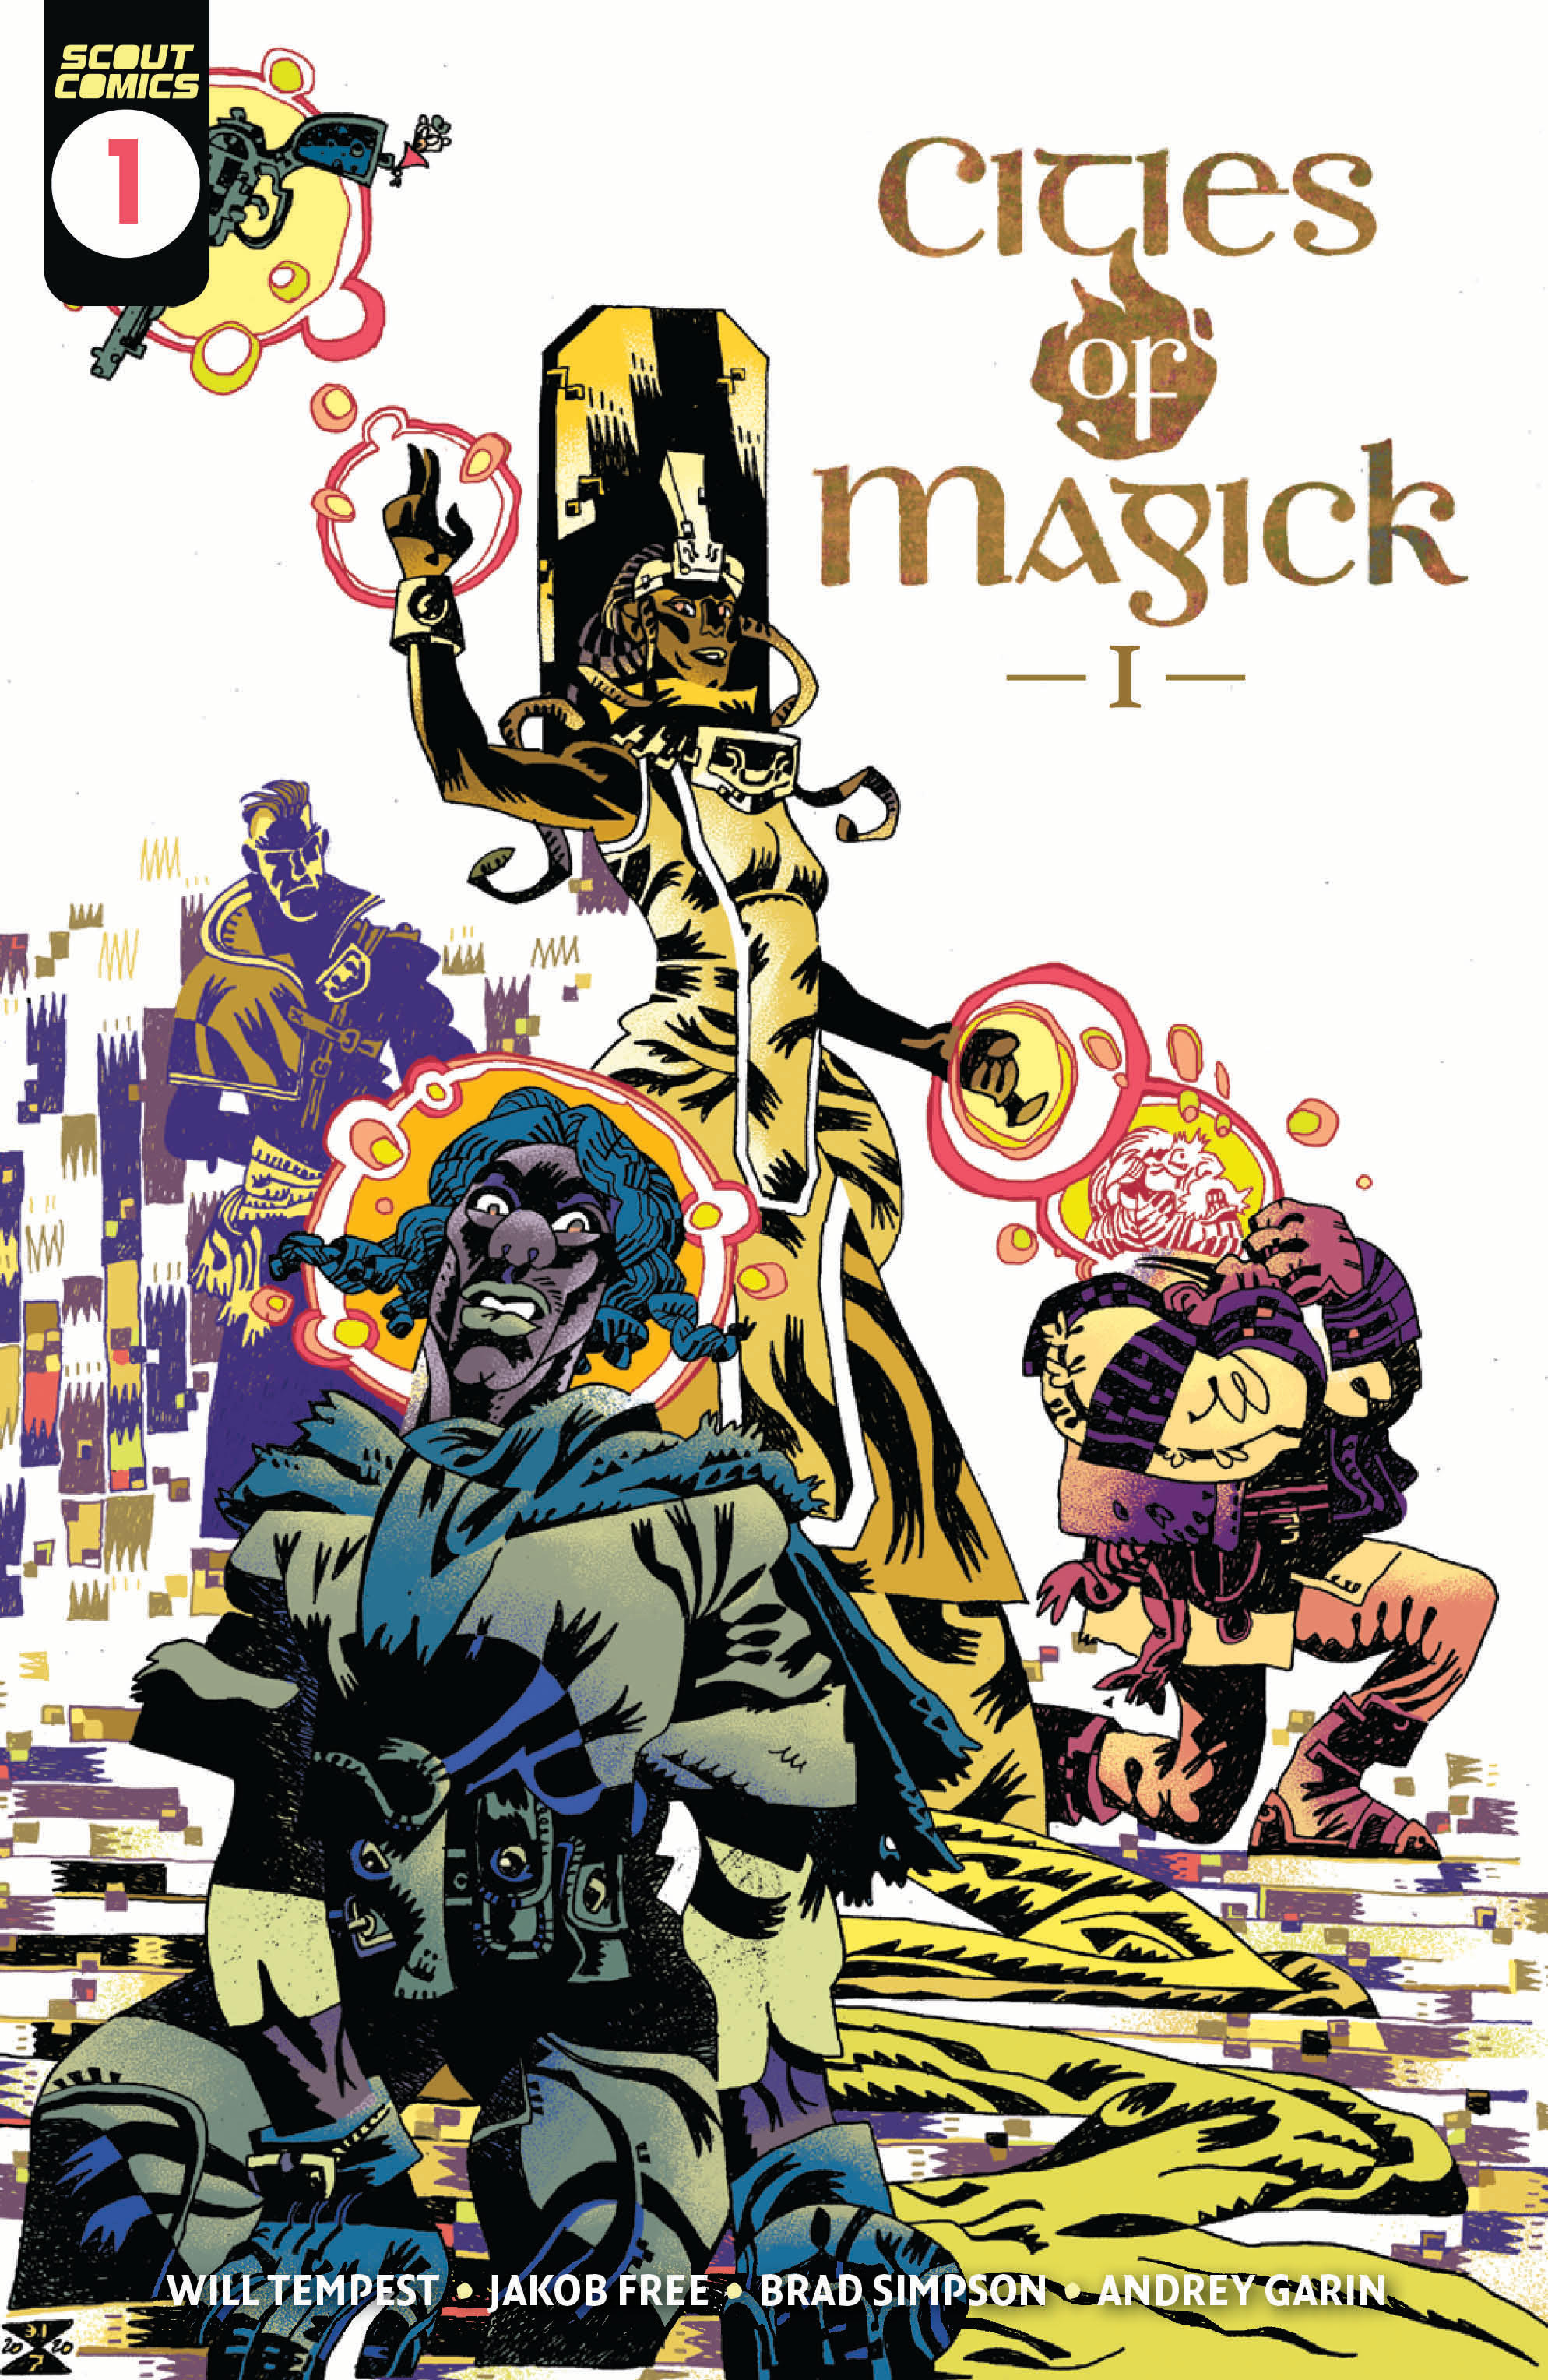 Cities of Magick #1 Cover B 10 Copy Trakhanov Unlock